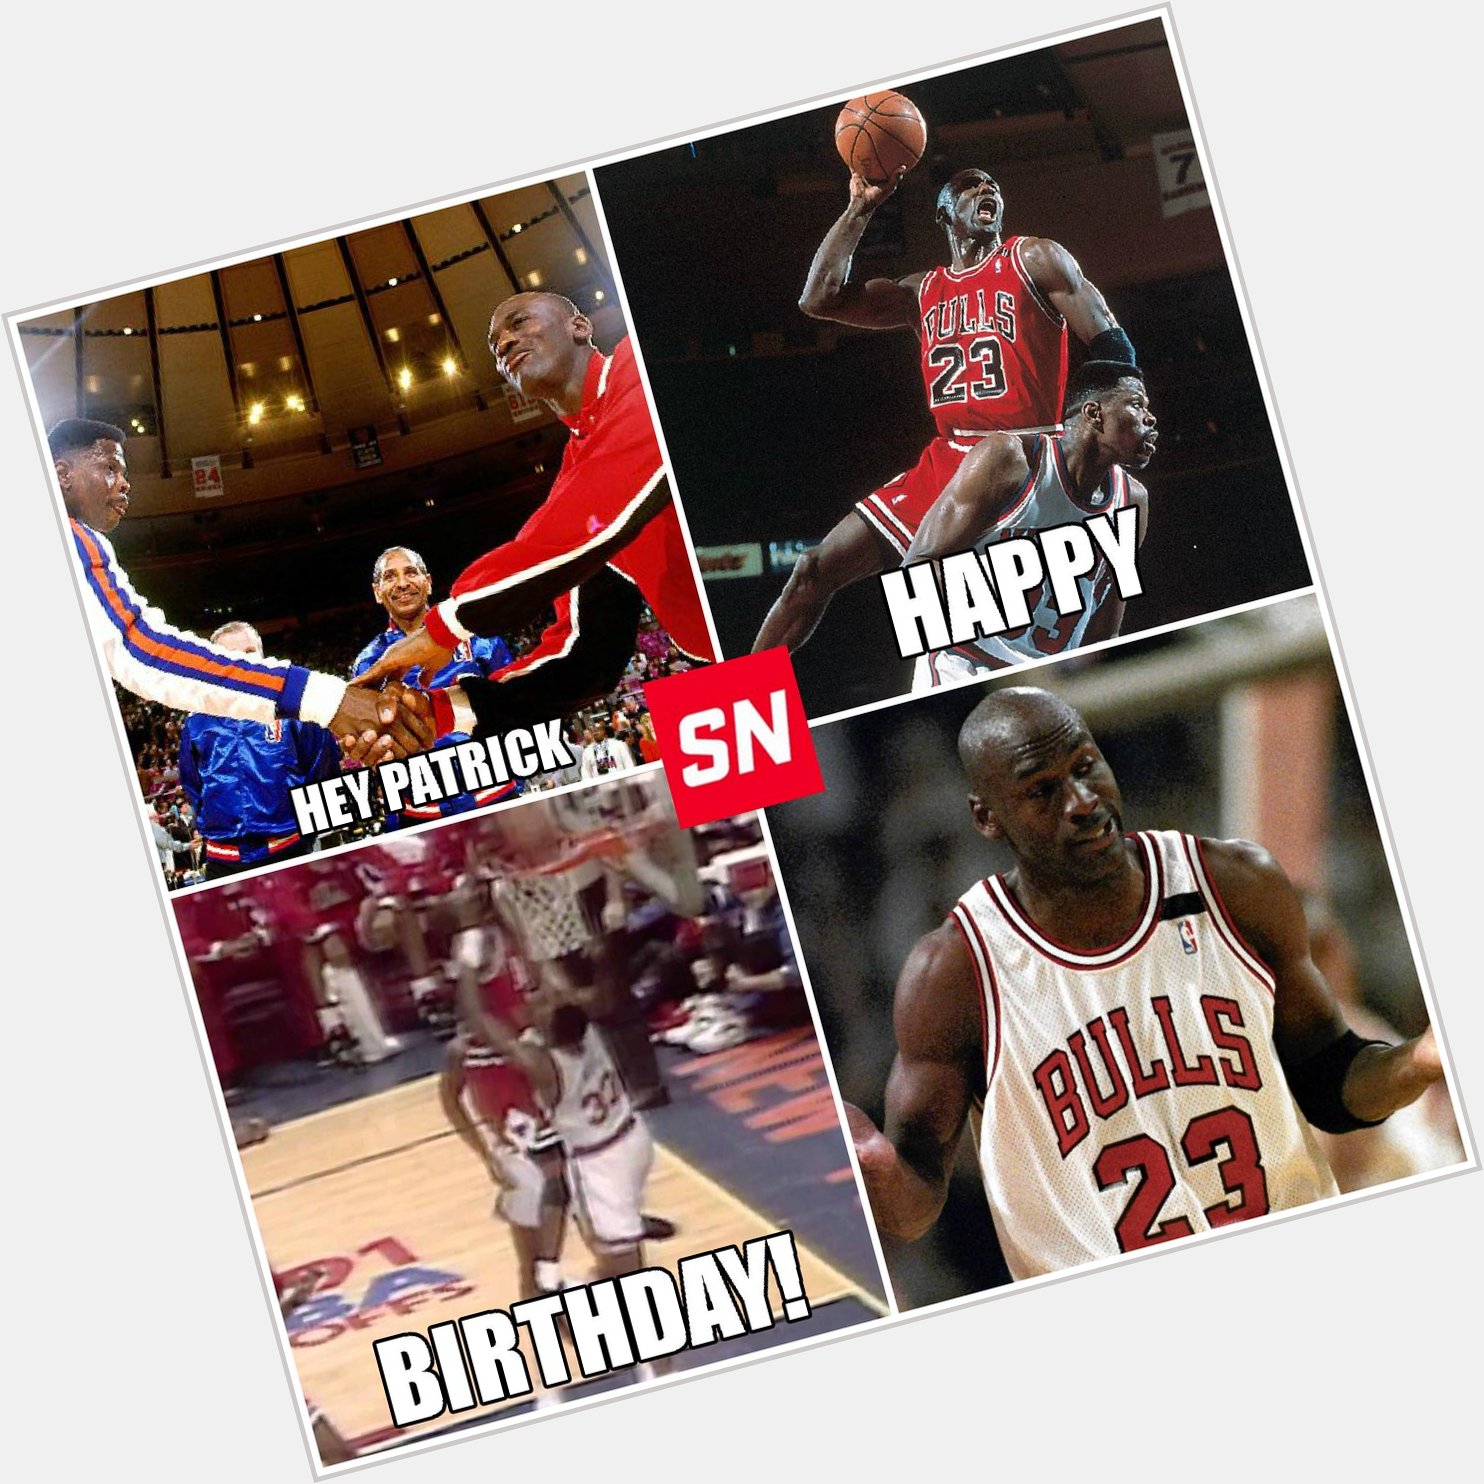 Michael Jordan would like to wish Patrick Ewing a very happy birthday. 